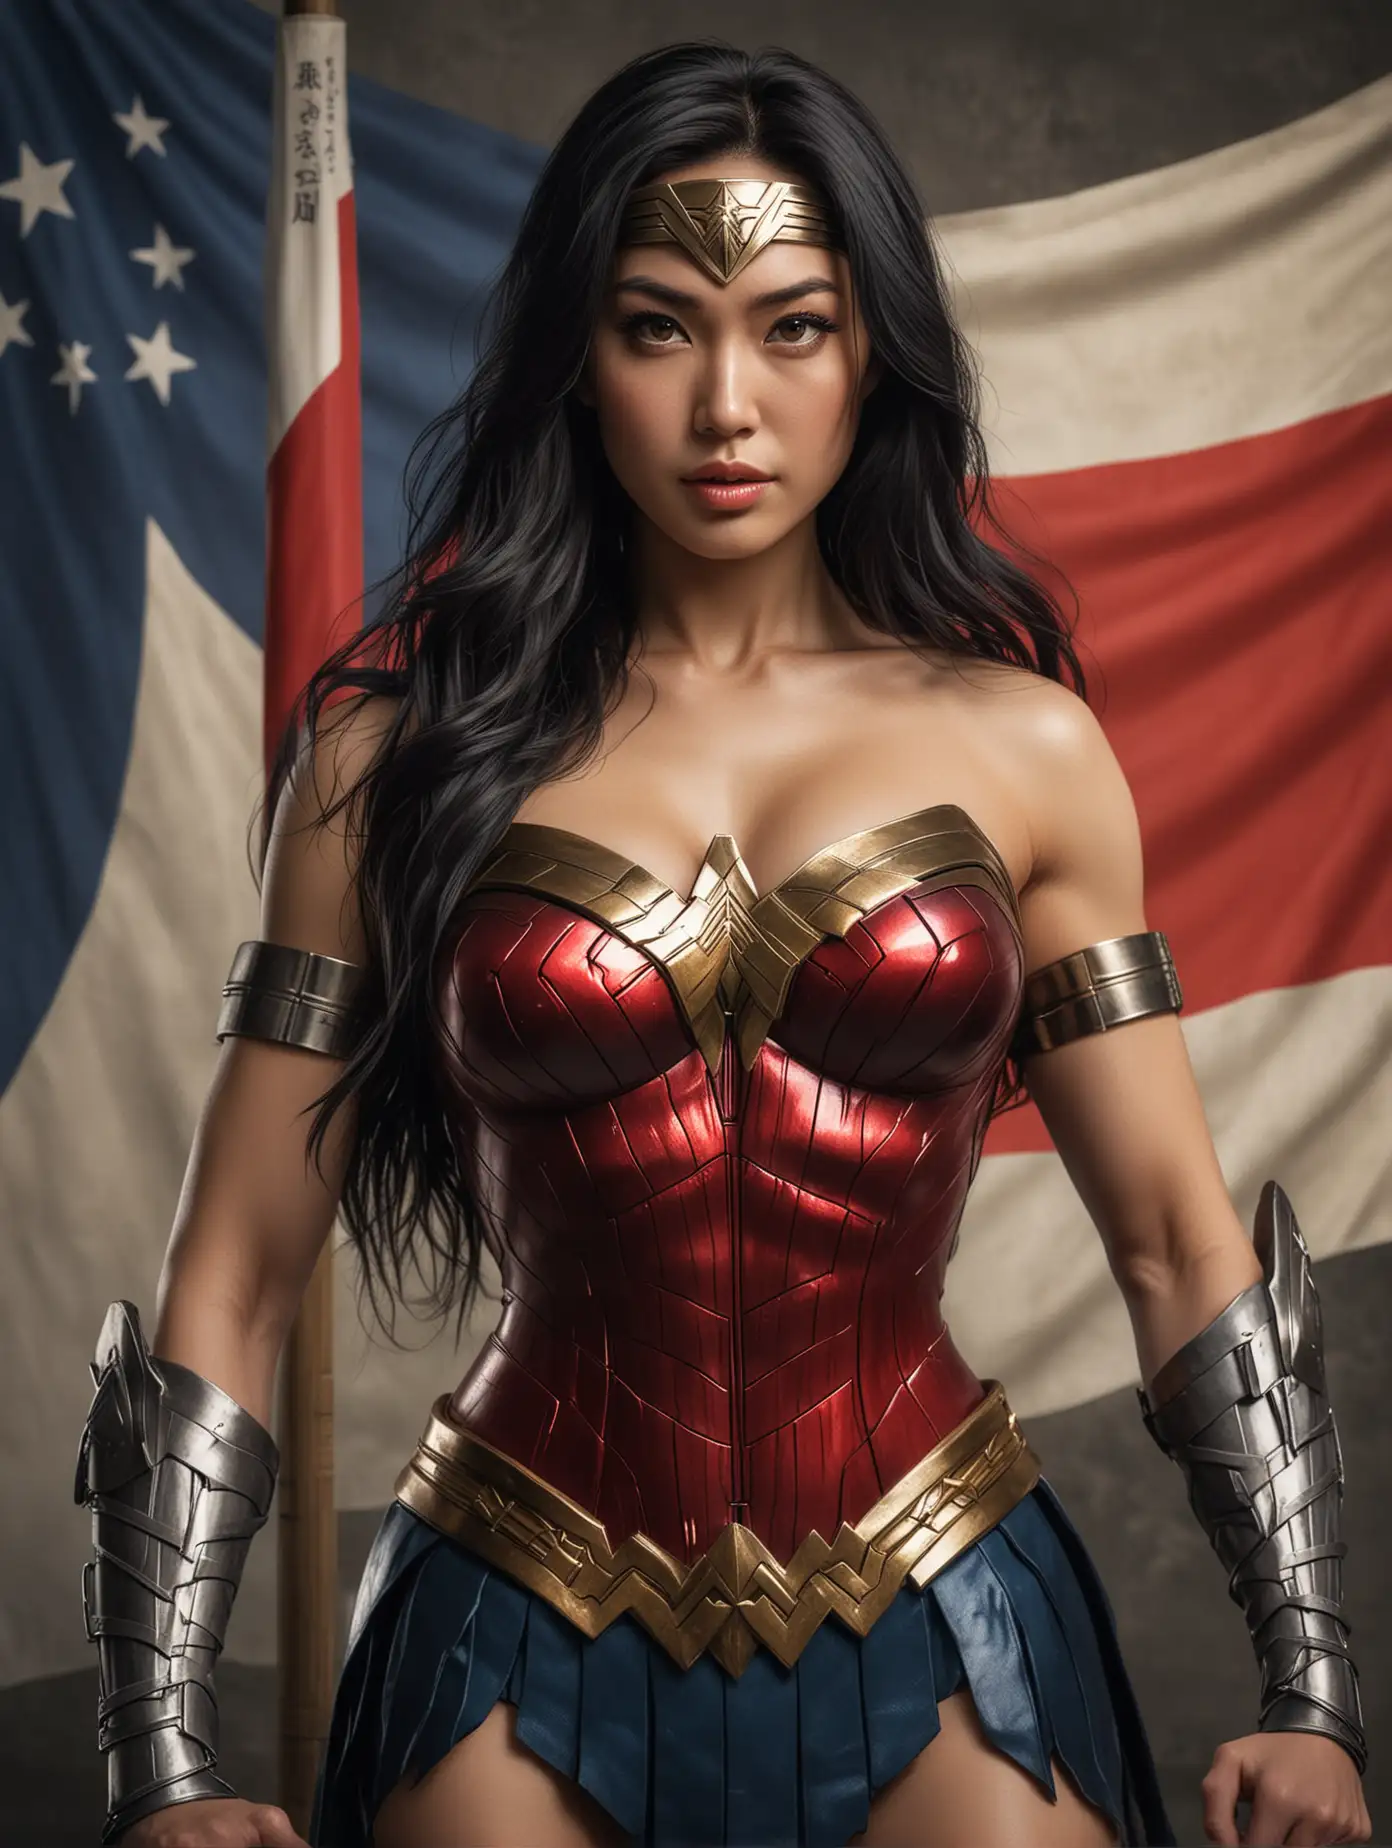 Japanese Wonder Woman CloseUp Portrait in Heroic Pose